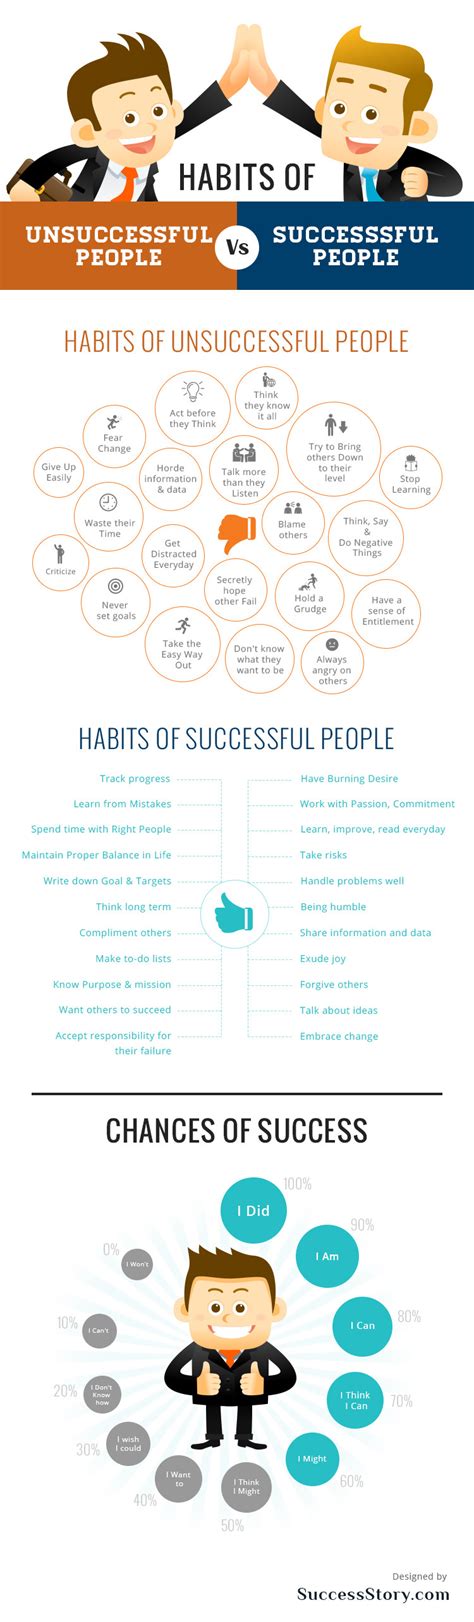 22 Vital Habits of Successful People - BrandonGaille.com